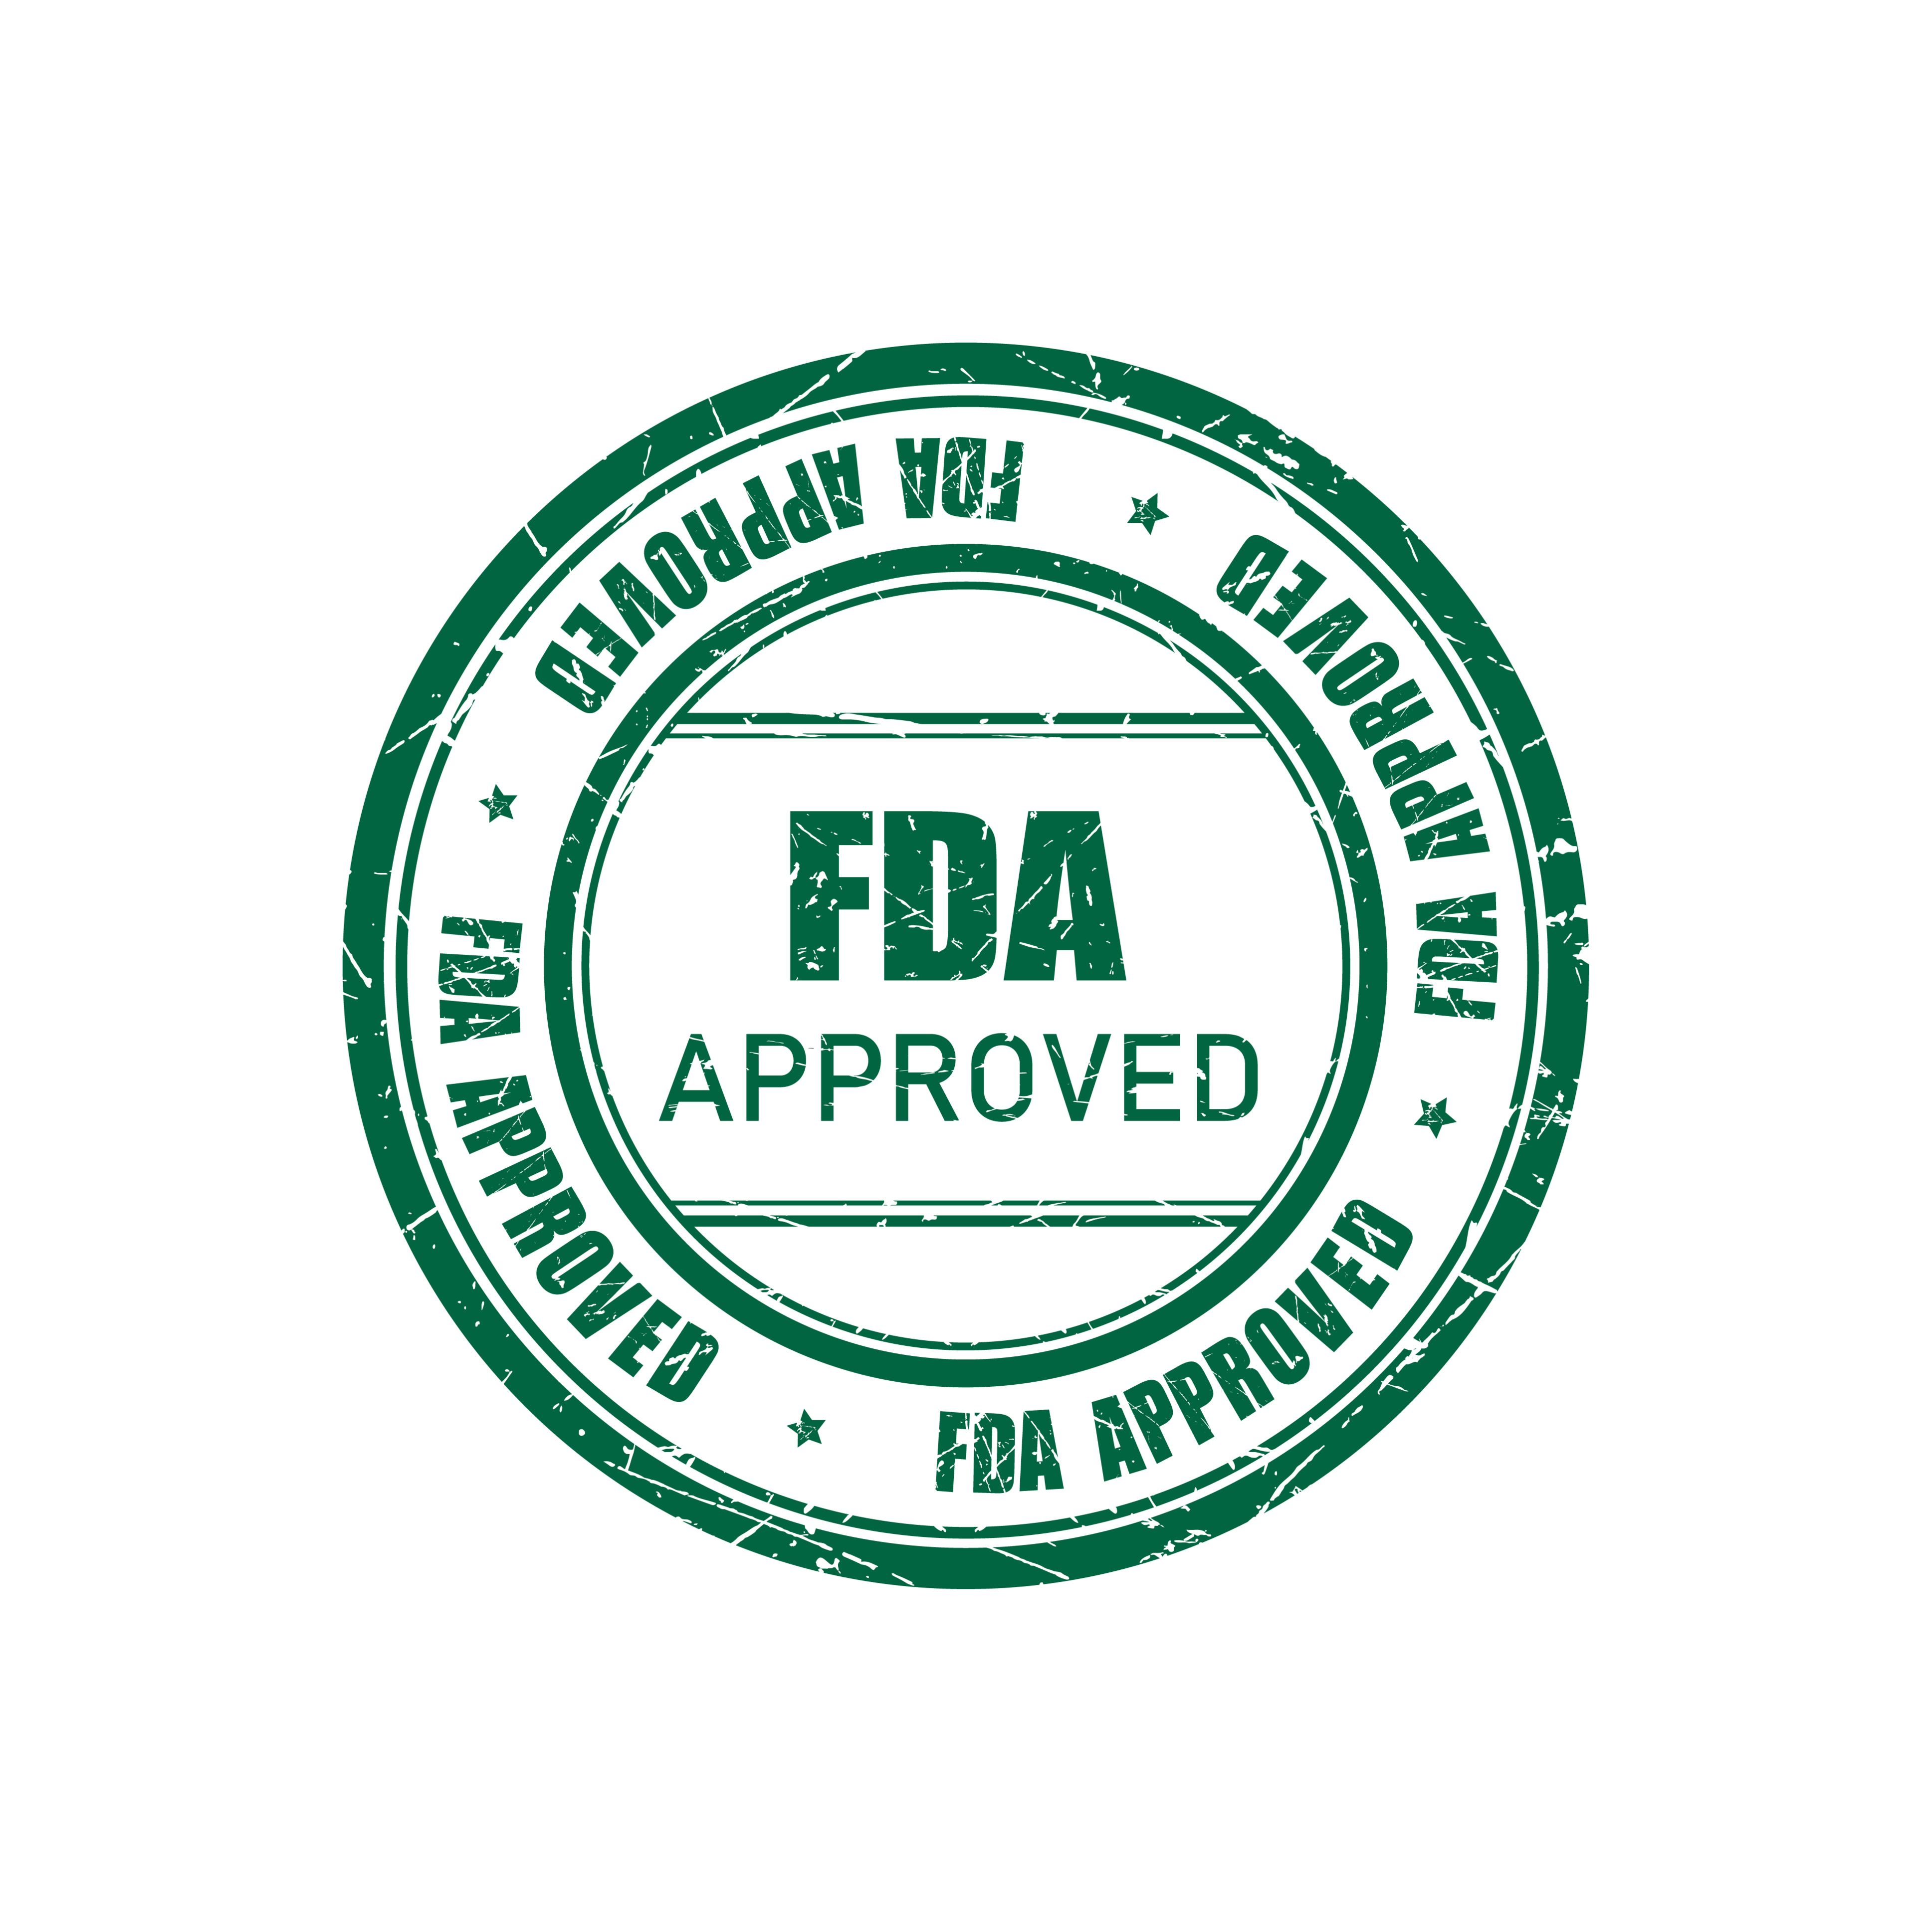 FDA approved | Image credit: ArtEternal – stock.adobe.com